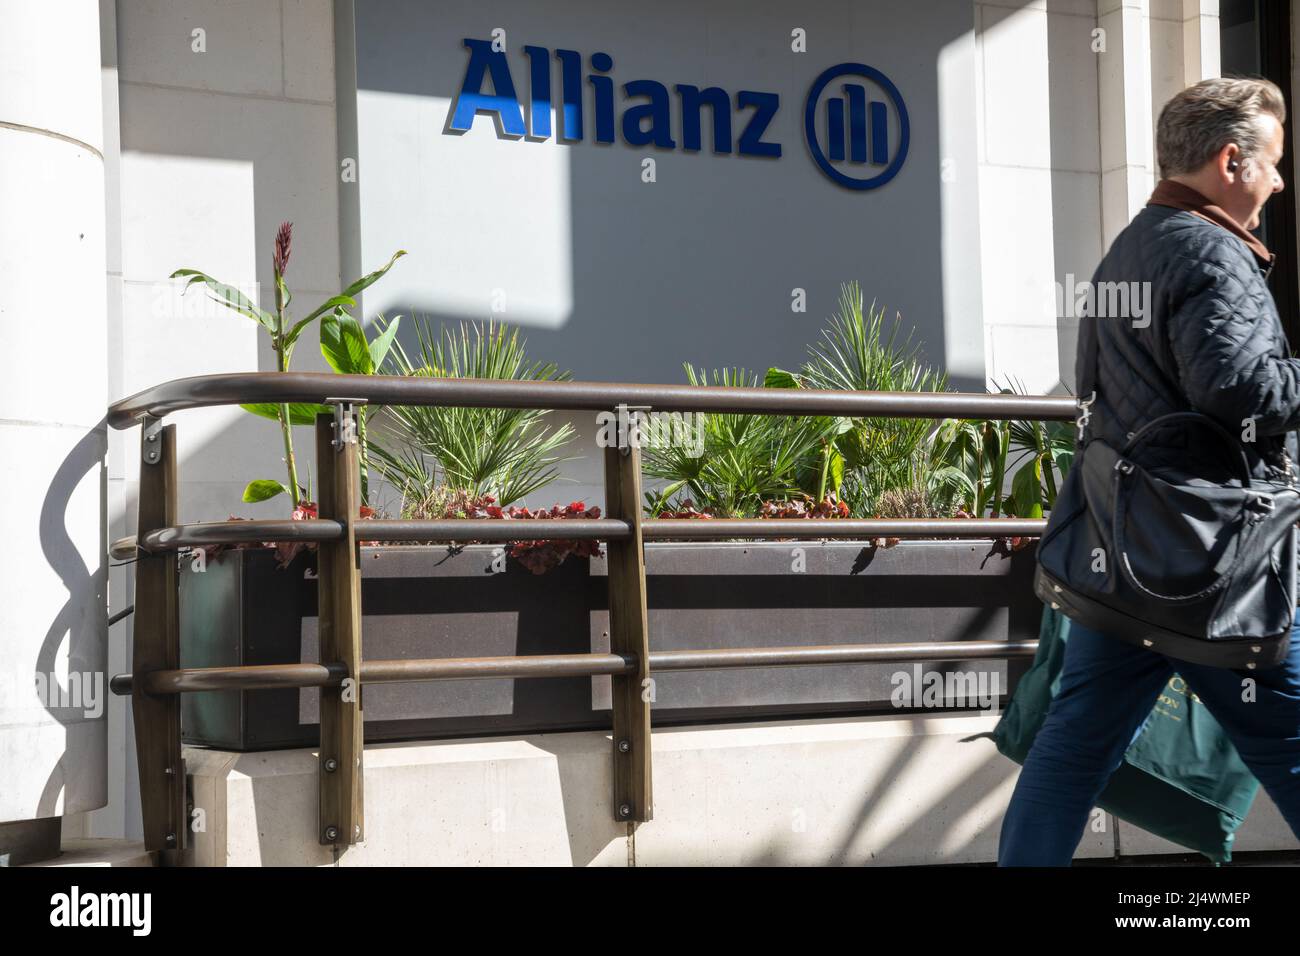 Allianz Insurance London office exterior showing signage   60 Gracechurch St, London EC3V 0HR Stock Photo